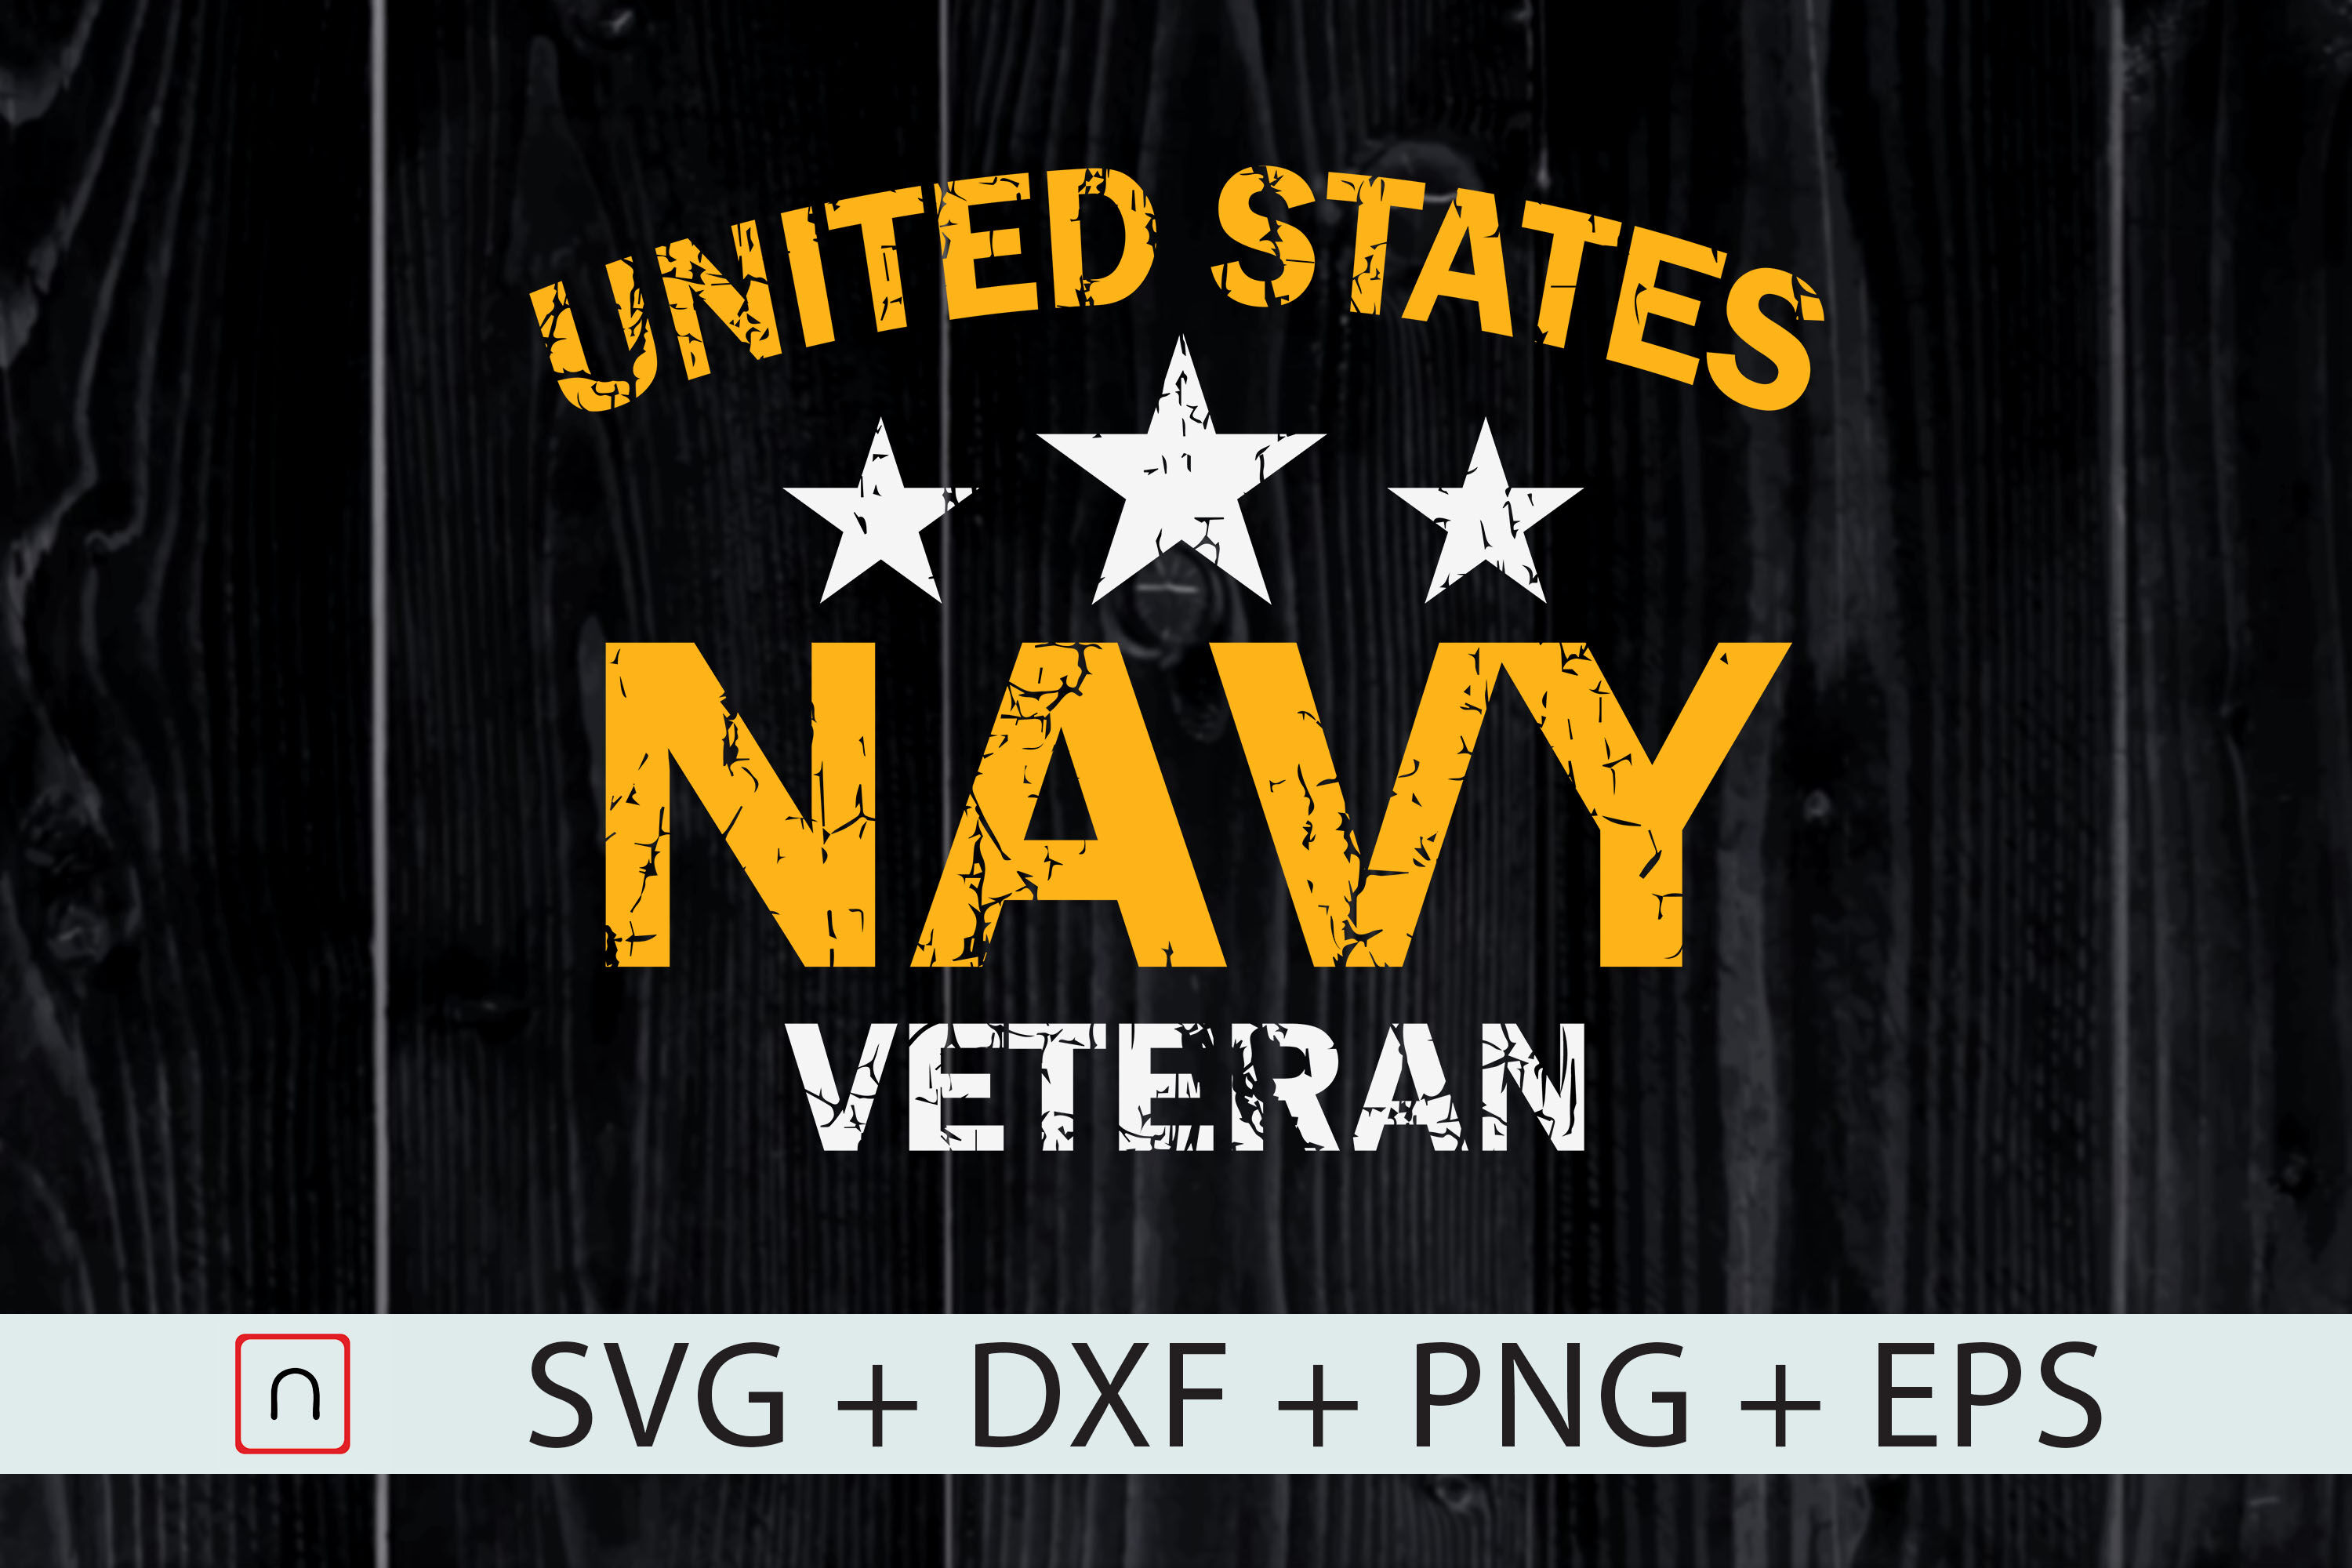 United States Navy Veteran Faded Grunge By Novalia | TheHungryJPEG.com